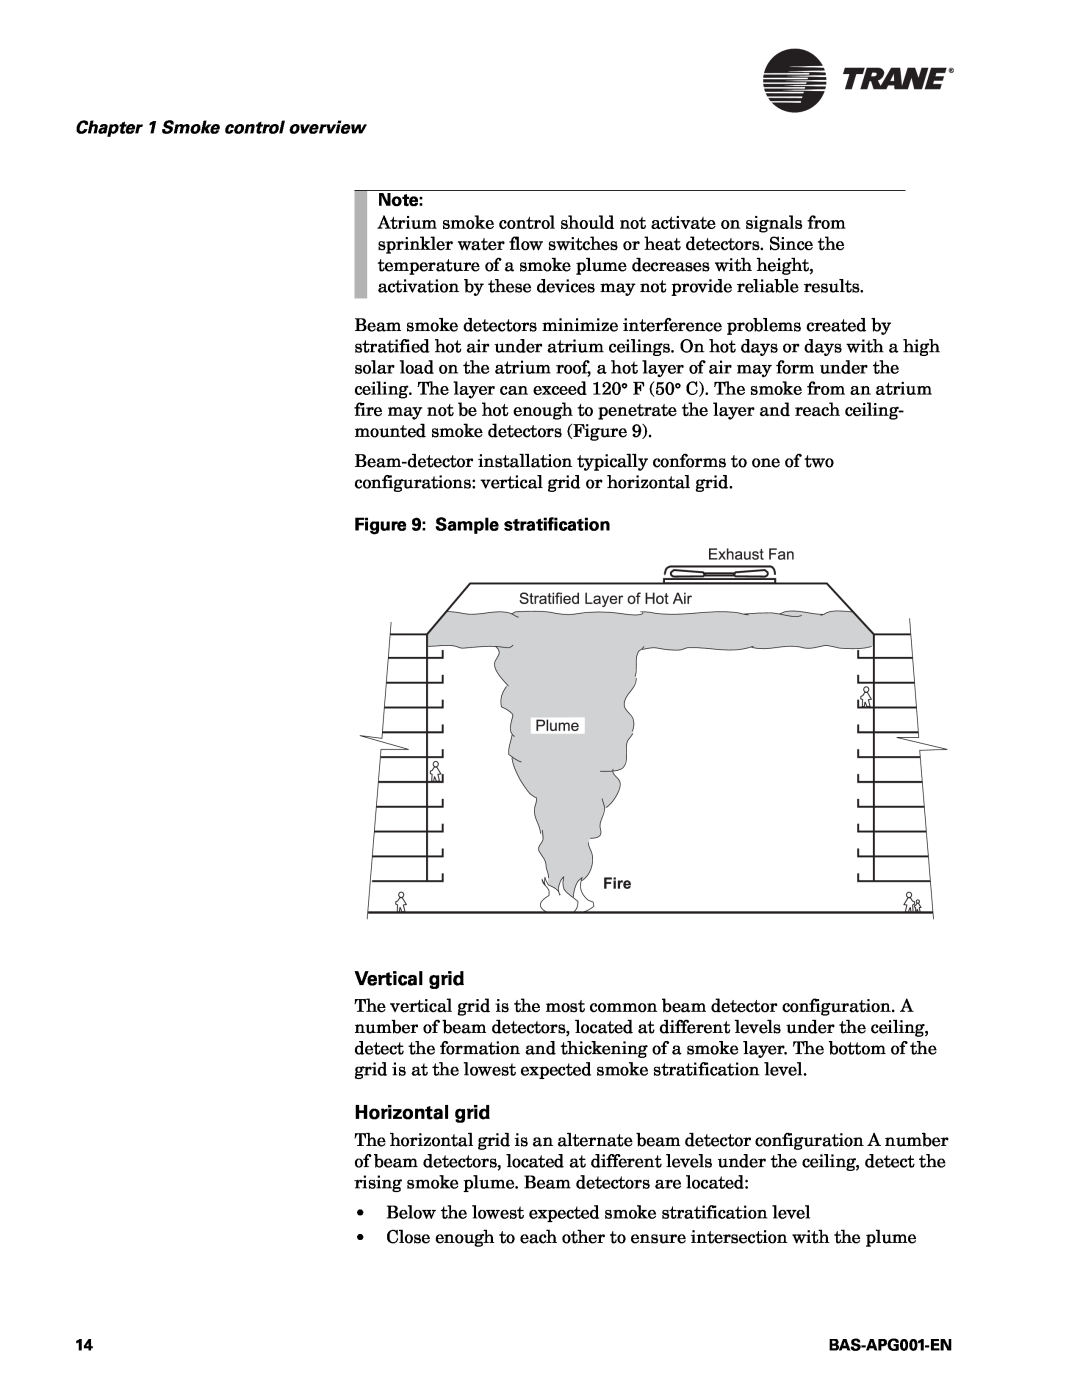 Trane BAS-APG001-EN manual Vertical grid, Horizontal grid, Smoke control overview, Sample stratification 